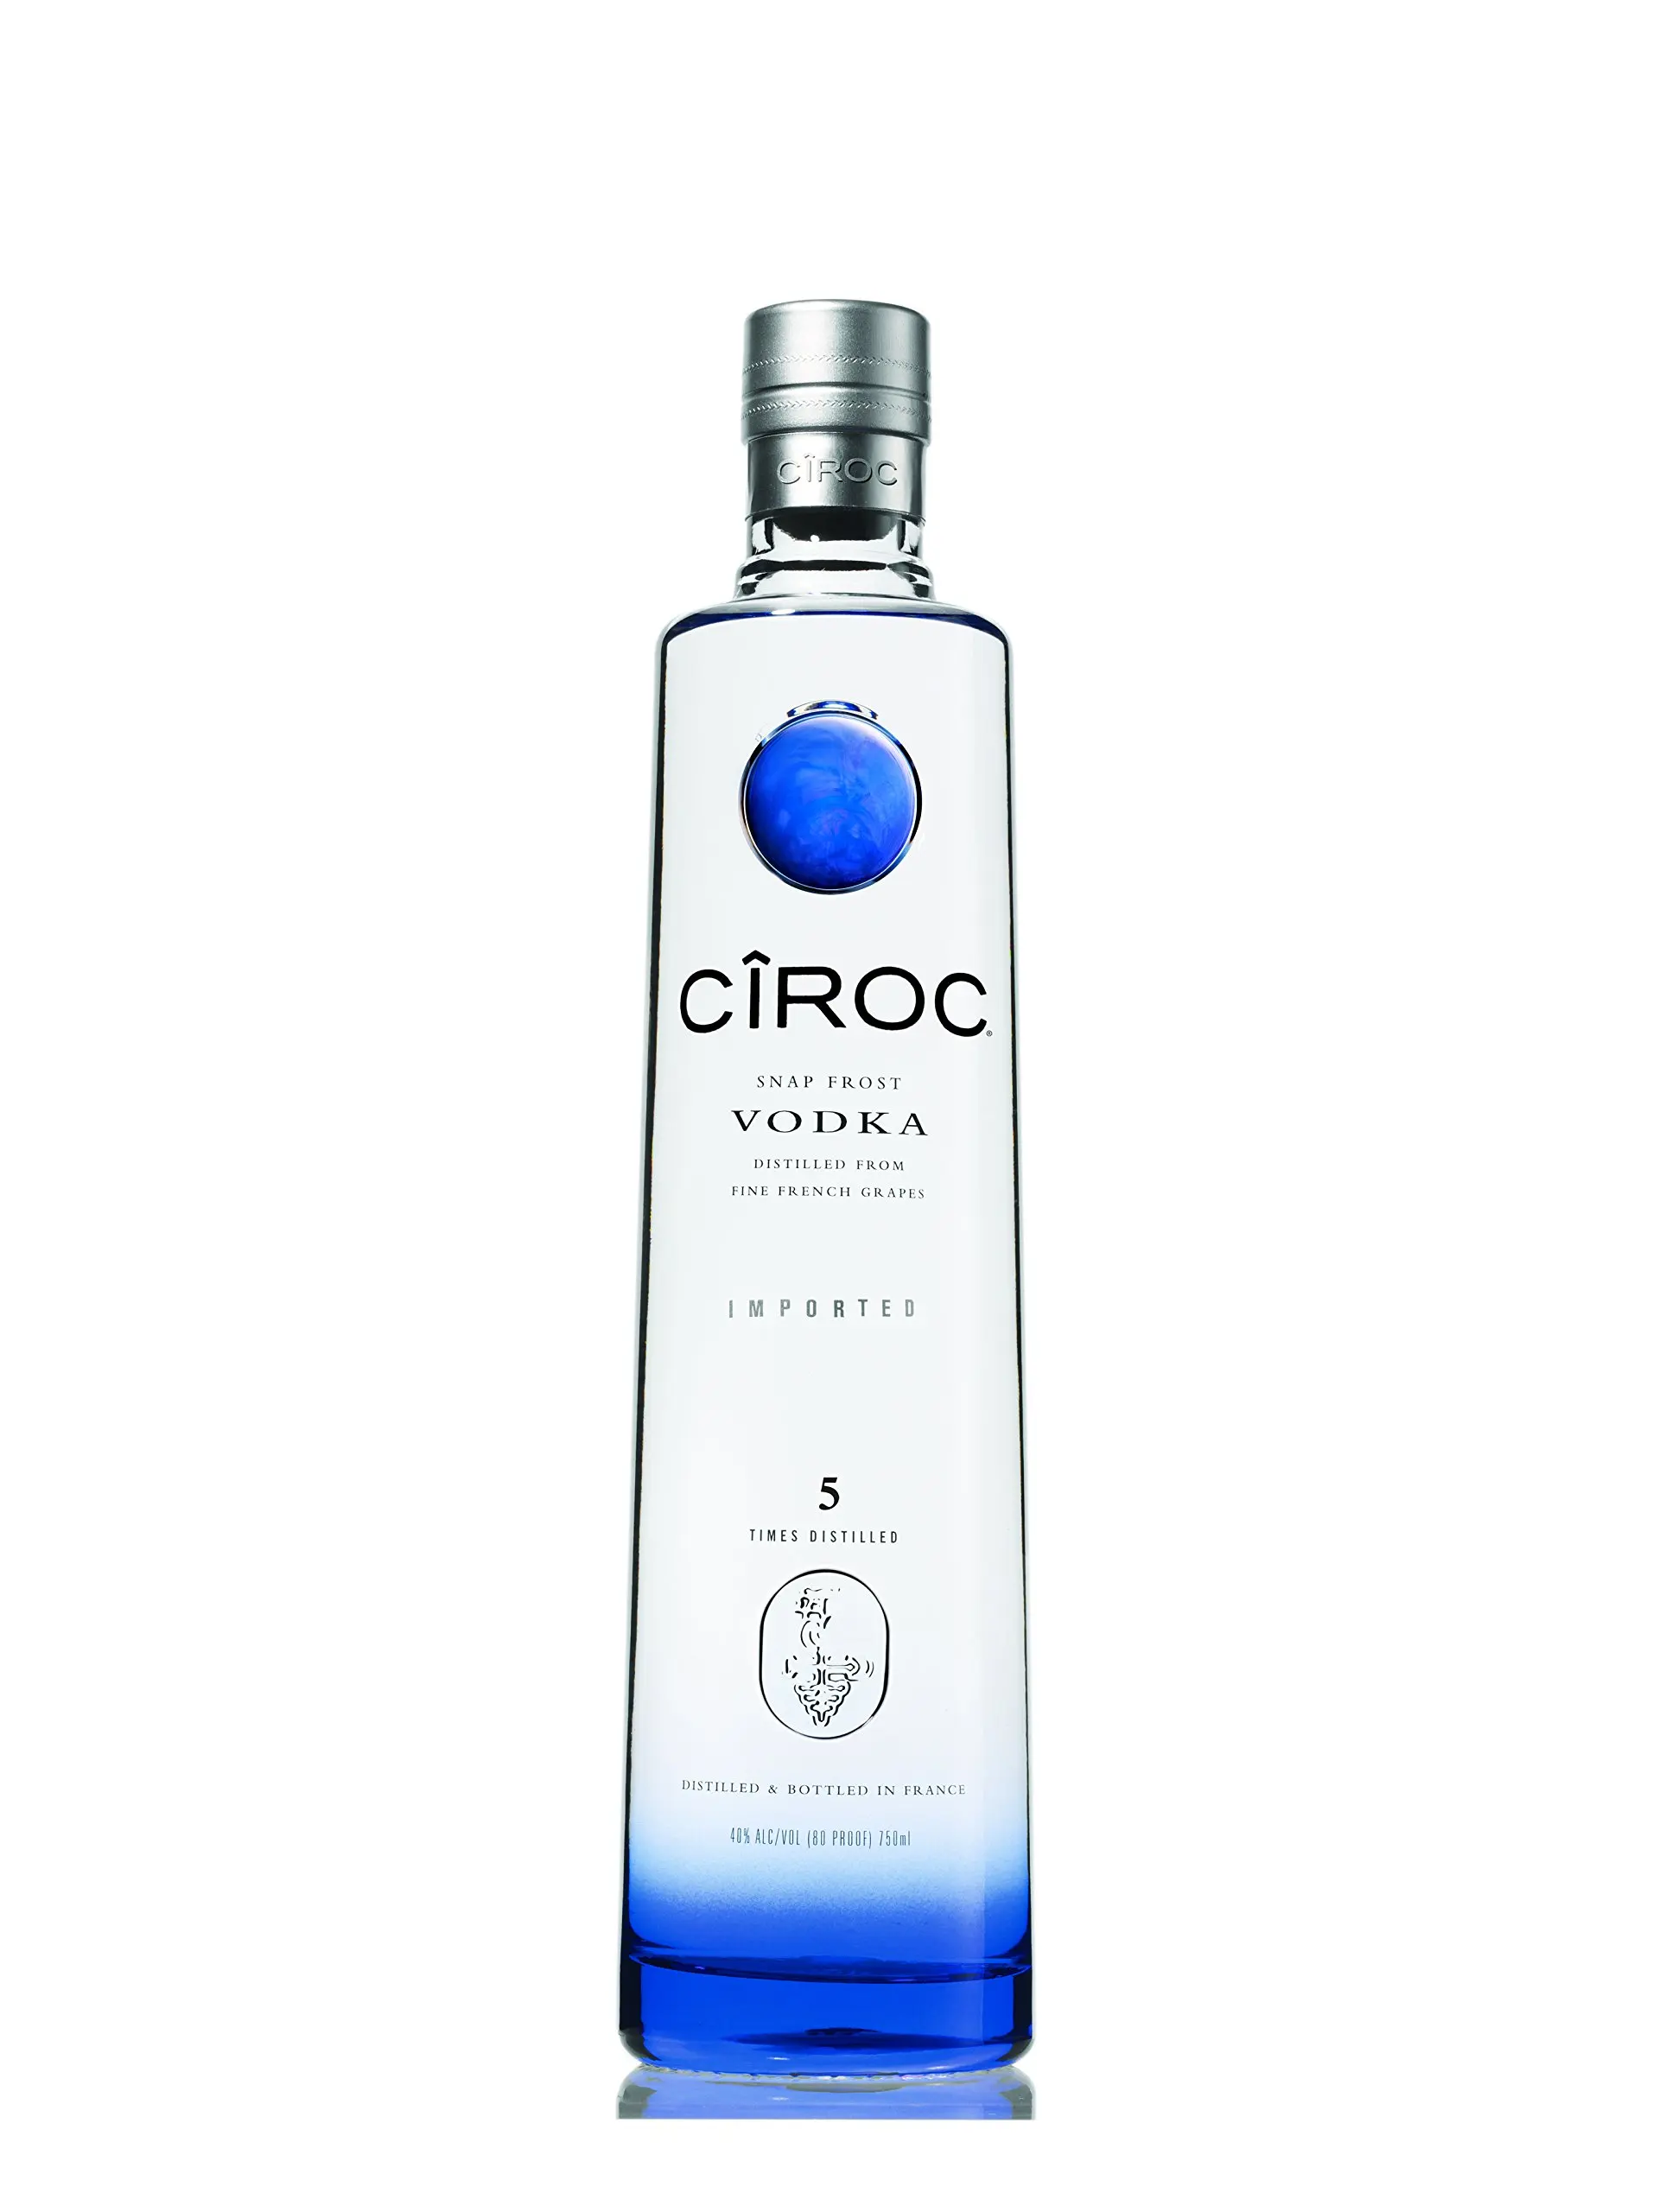 Cheap Ciroc Vodka Flavors, find Ciroc Vodka Flavors deals on line at